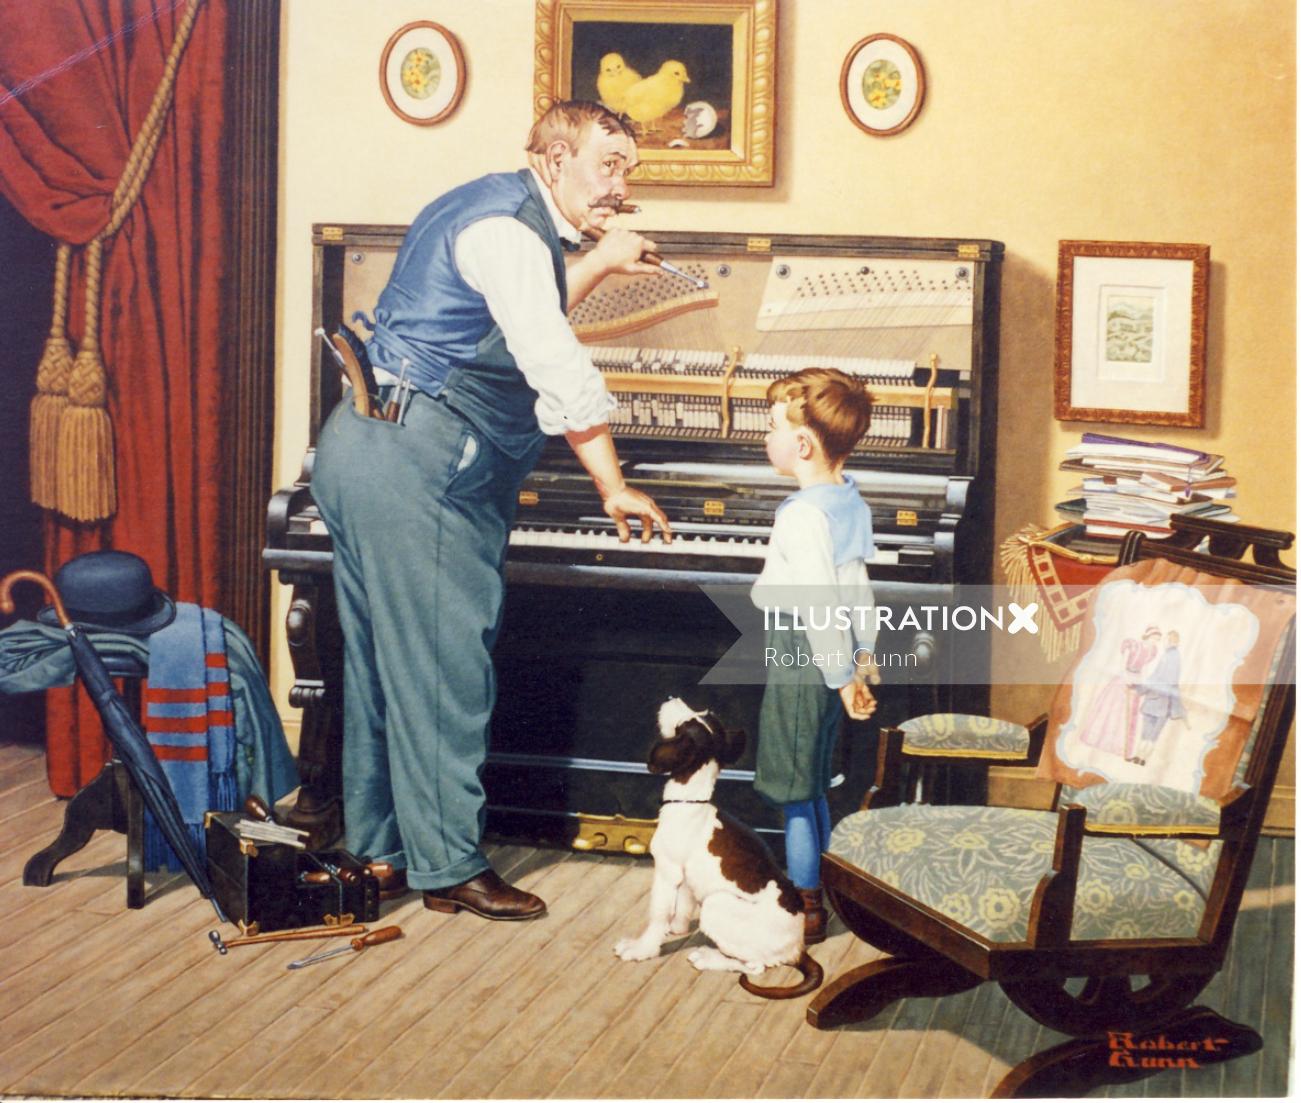 Illustration of skilled piano tuner tuning family piano by Robert Gunn